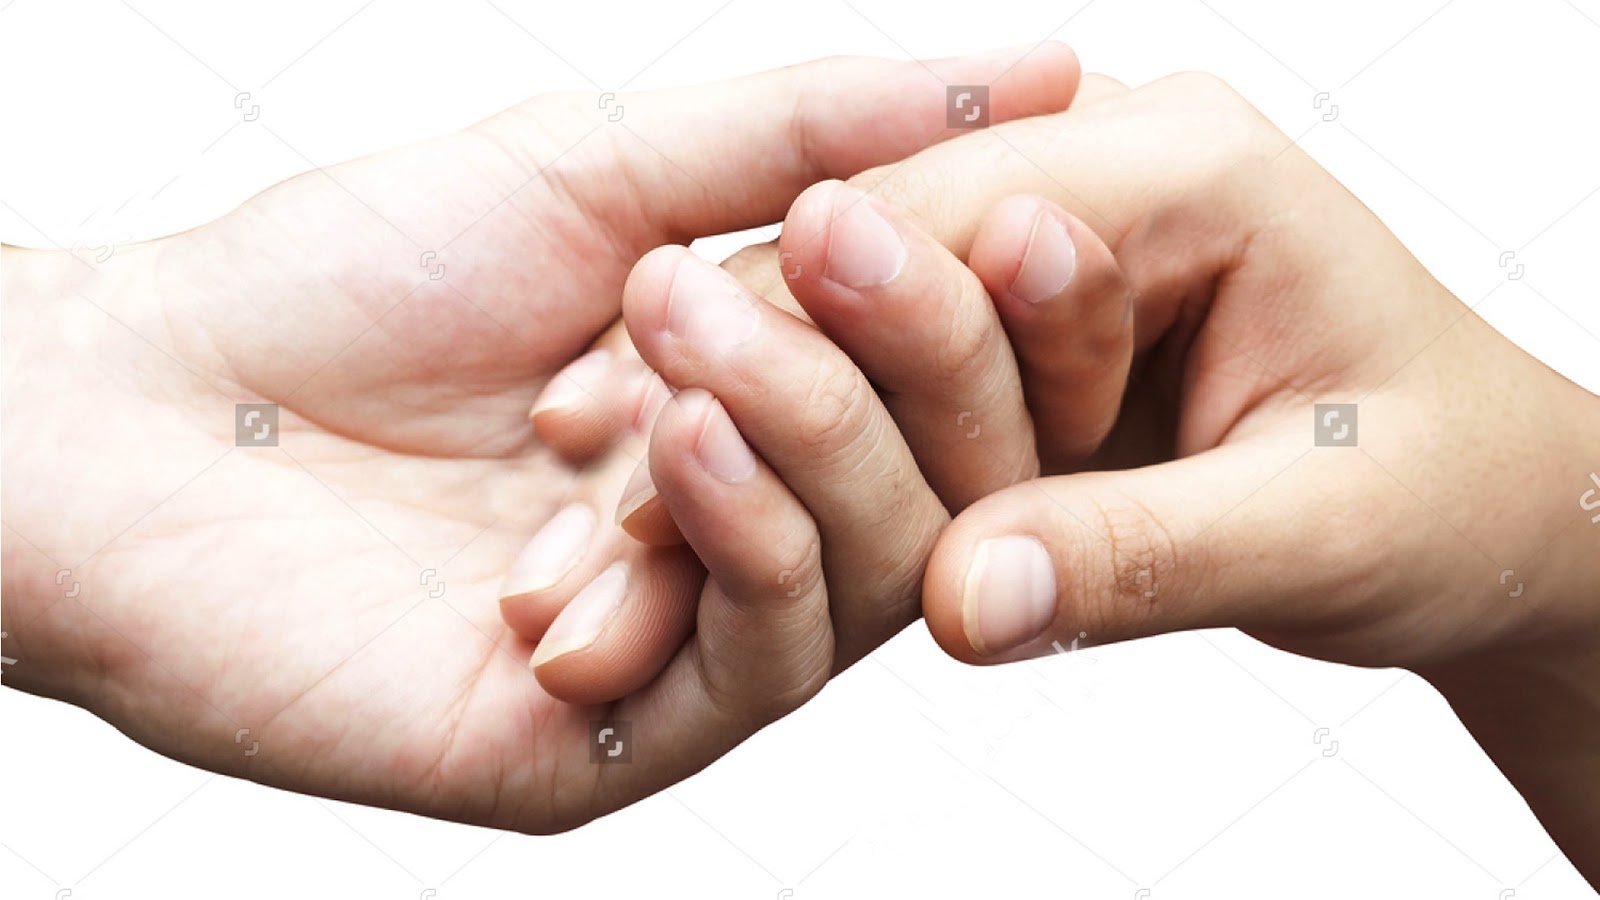 promesse fond d'écran,main,geste,fermer,humain,main dans la main